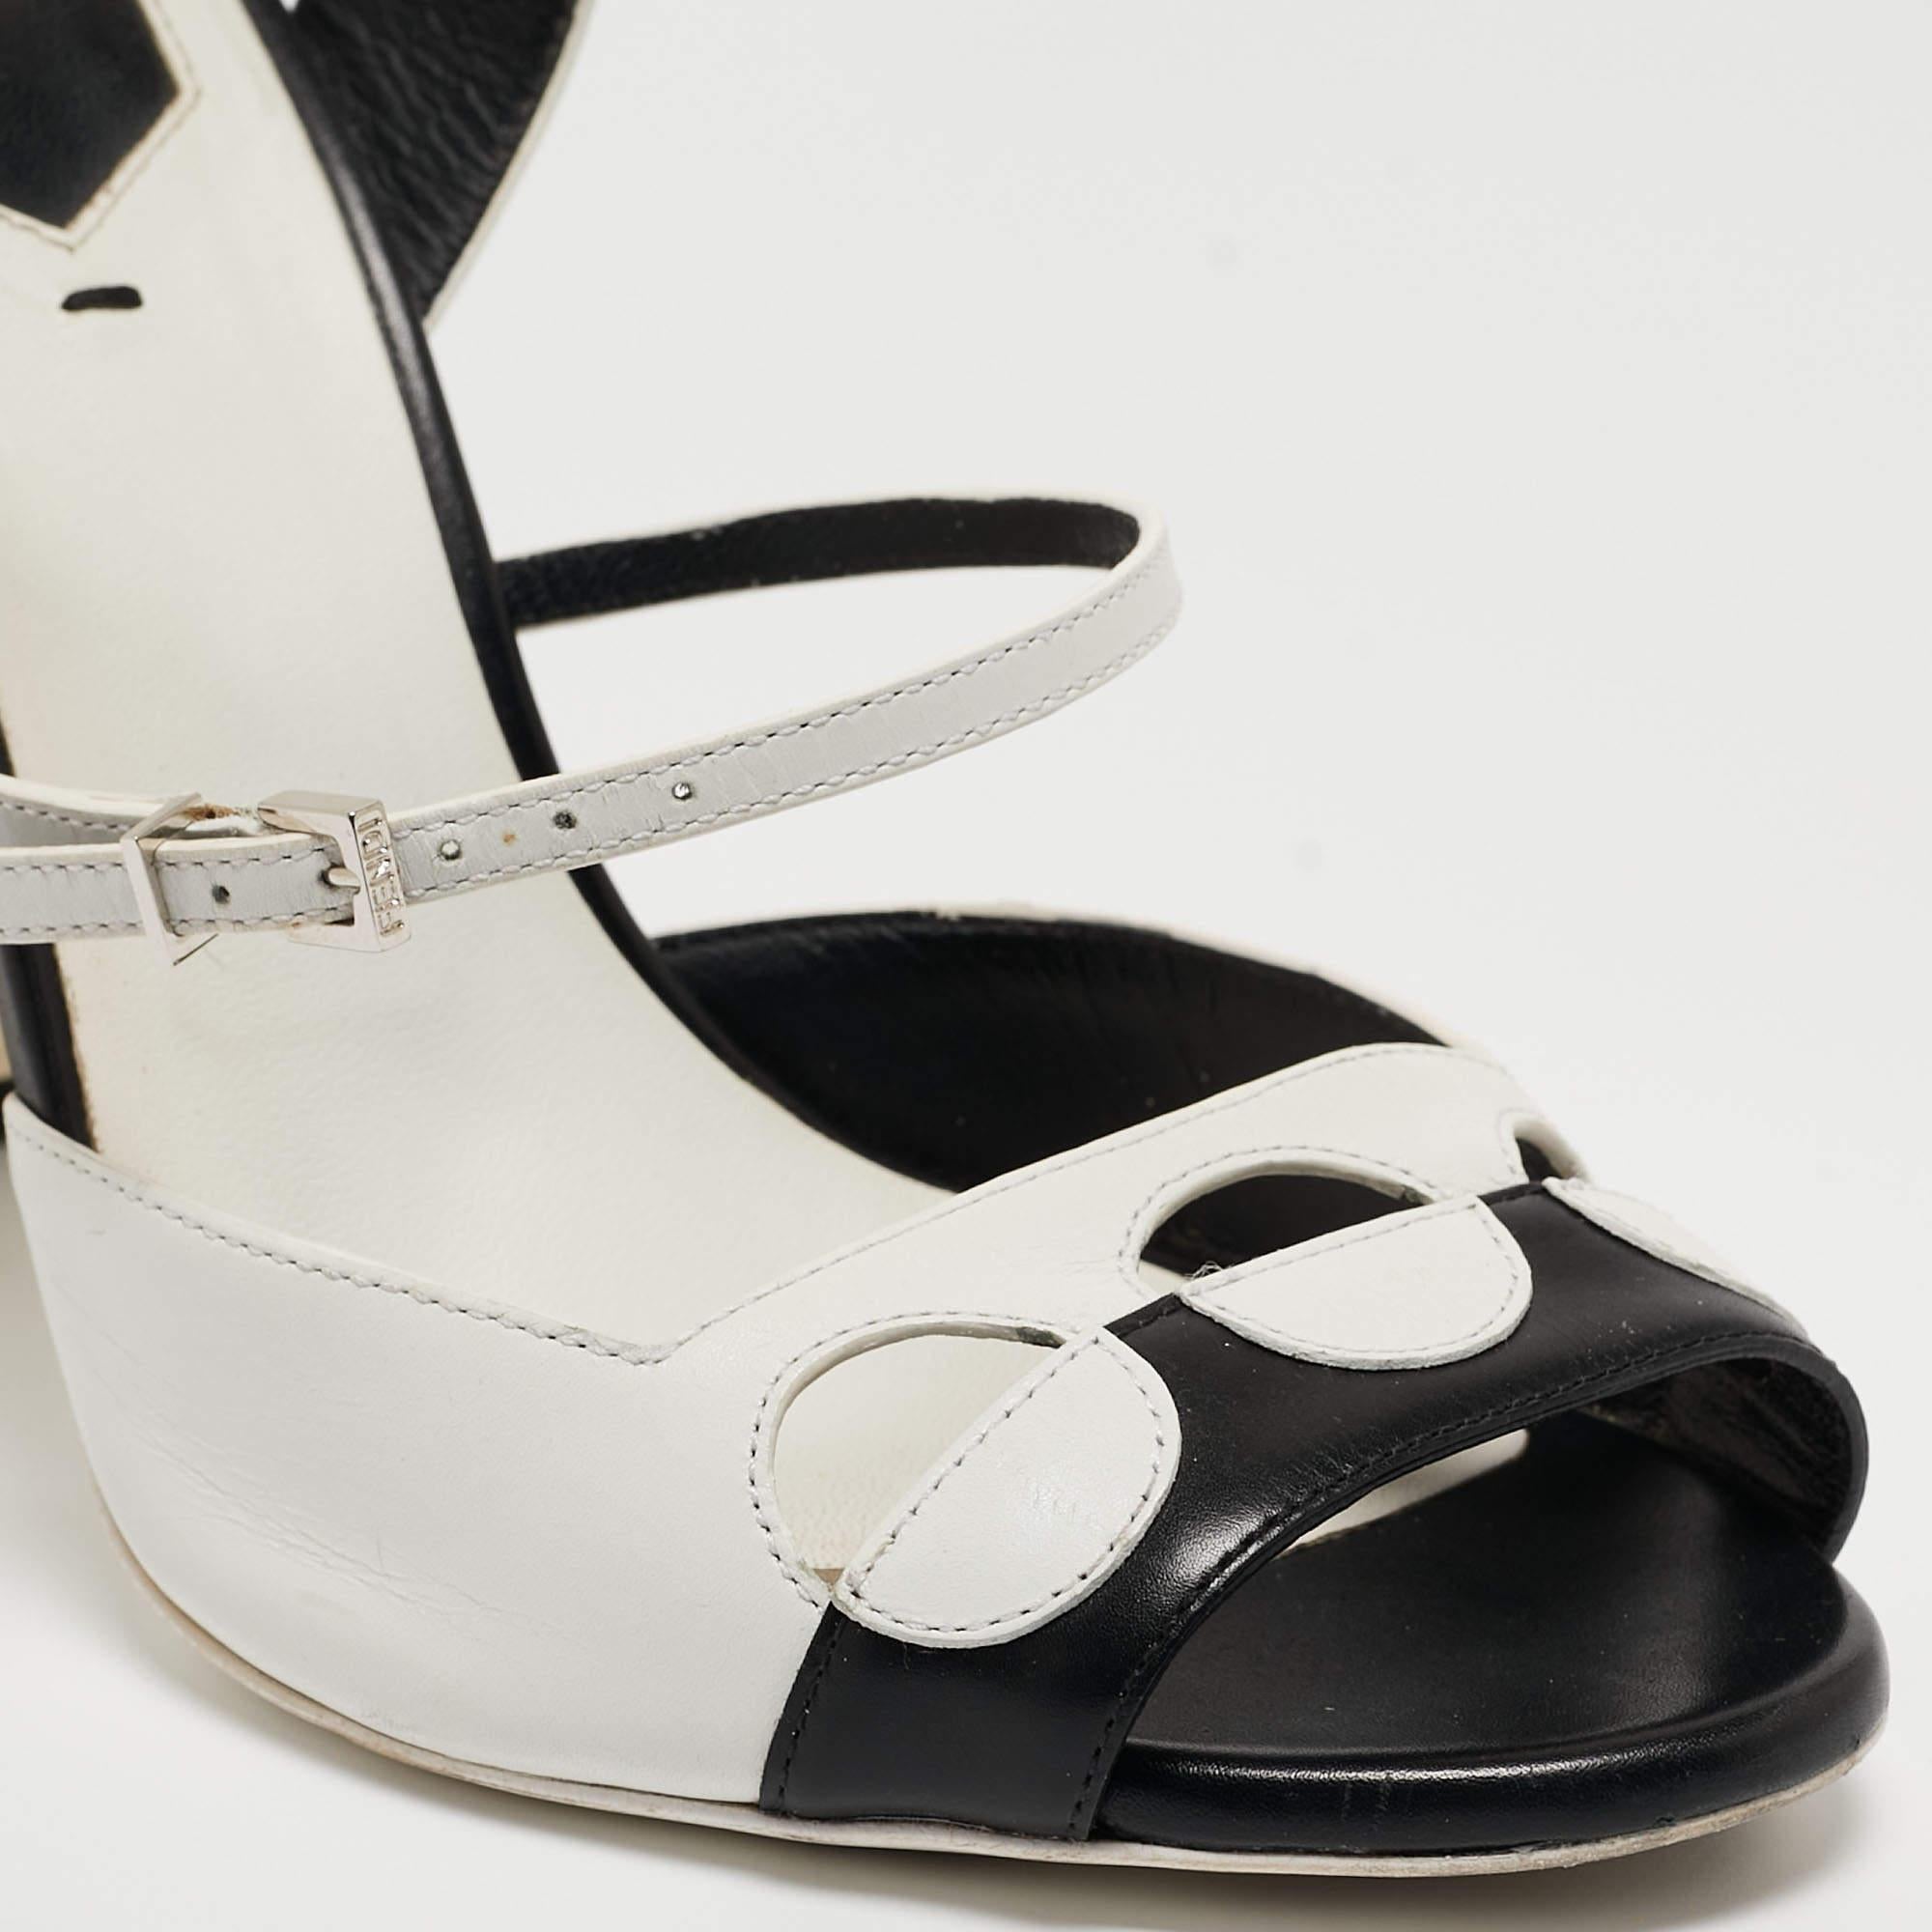 Fendi Black/White Leather Ankle Strap Sandals Size 38.5 3